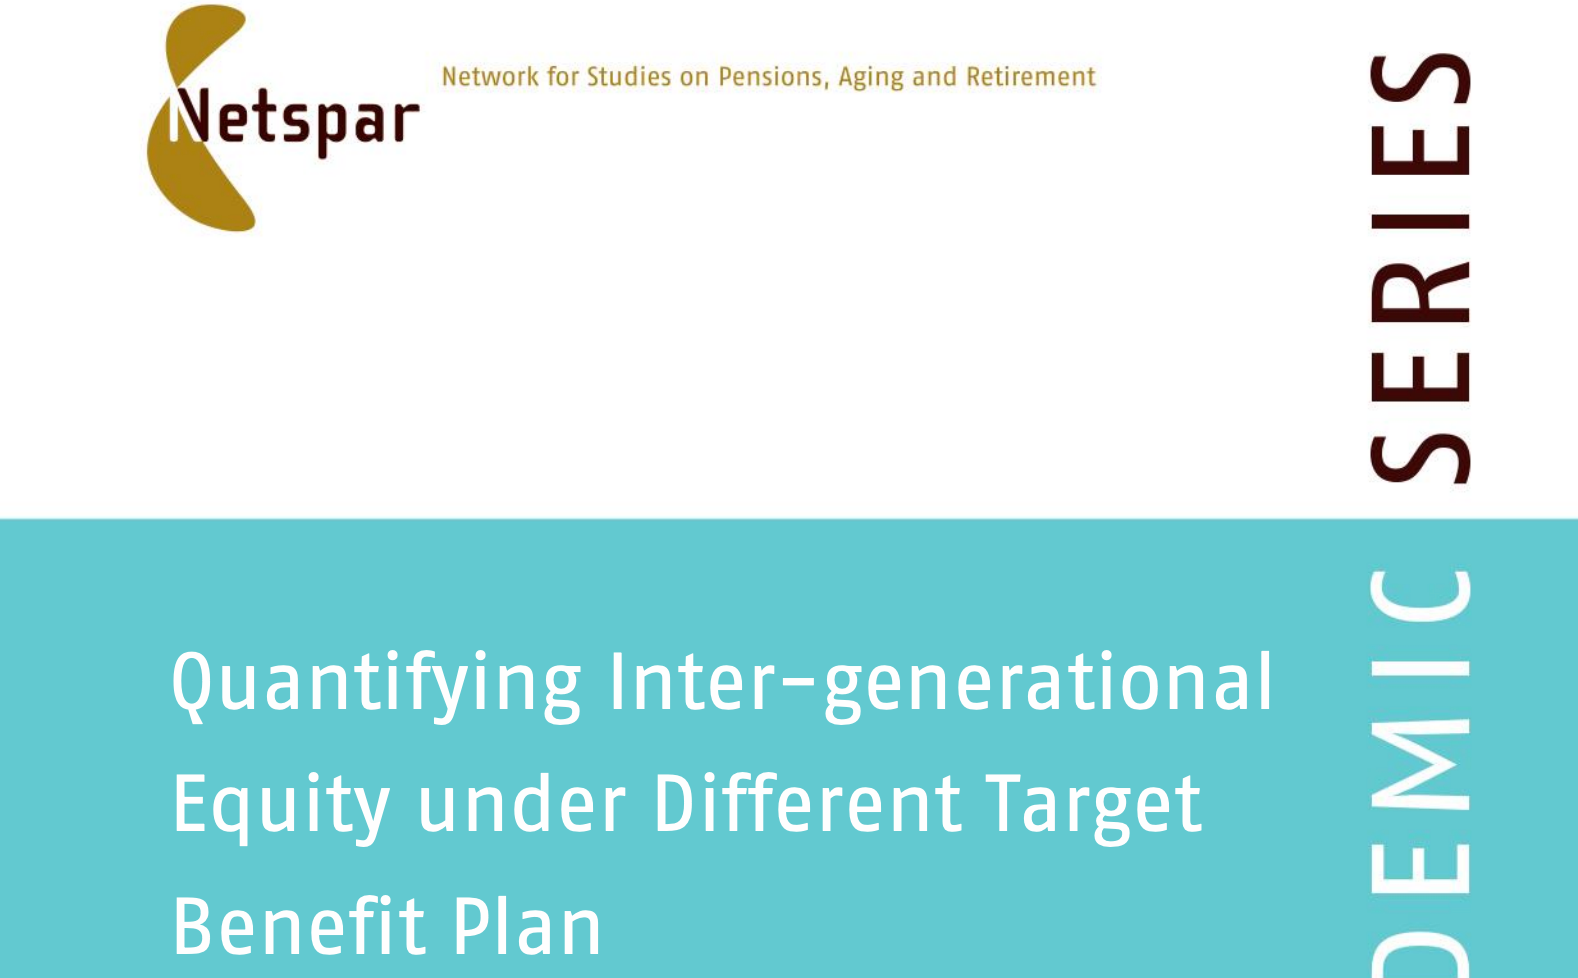 Quantifying Inter-generational Equity under Different Target Benefit Plan Designs